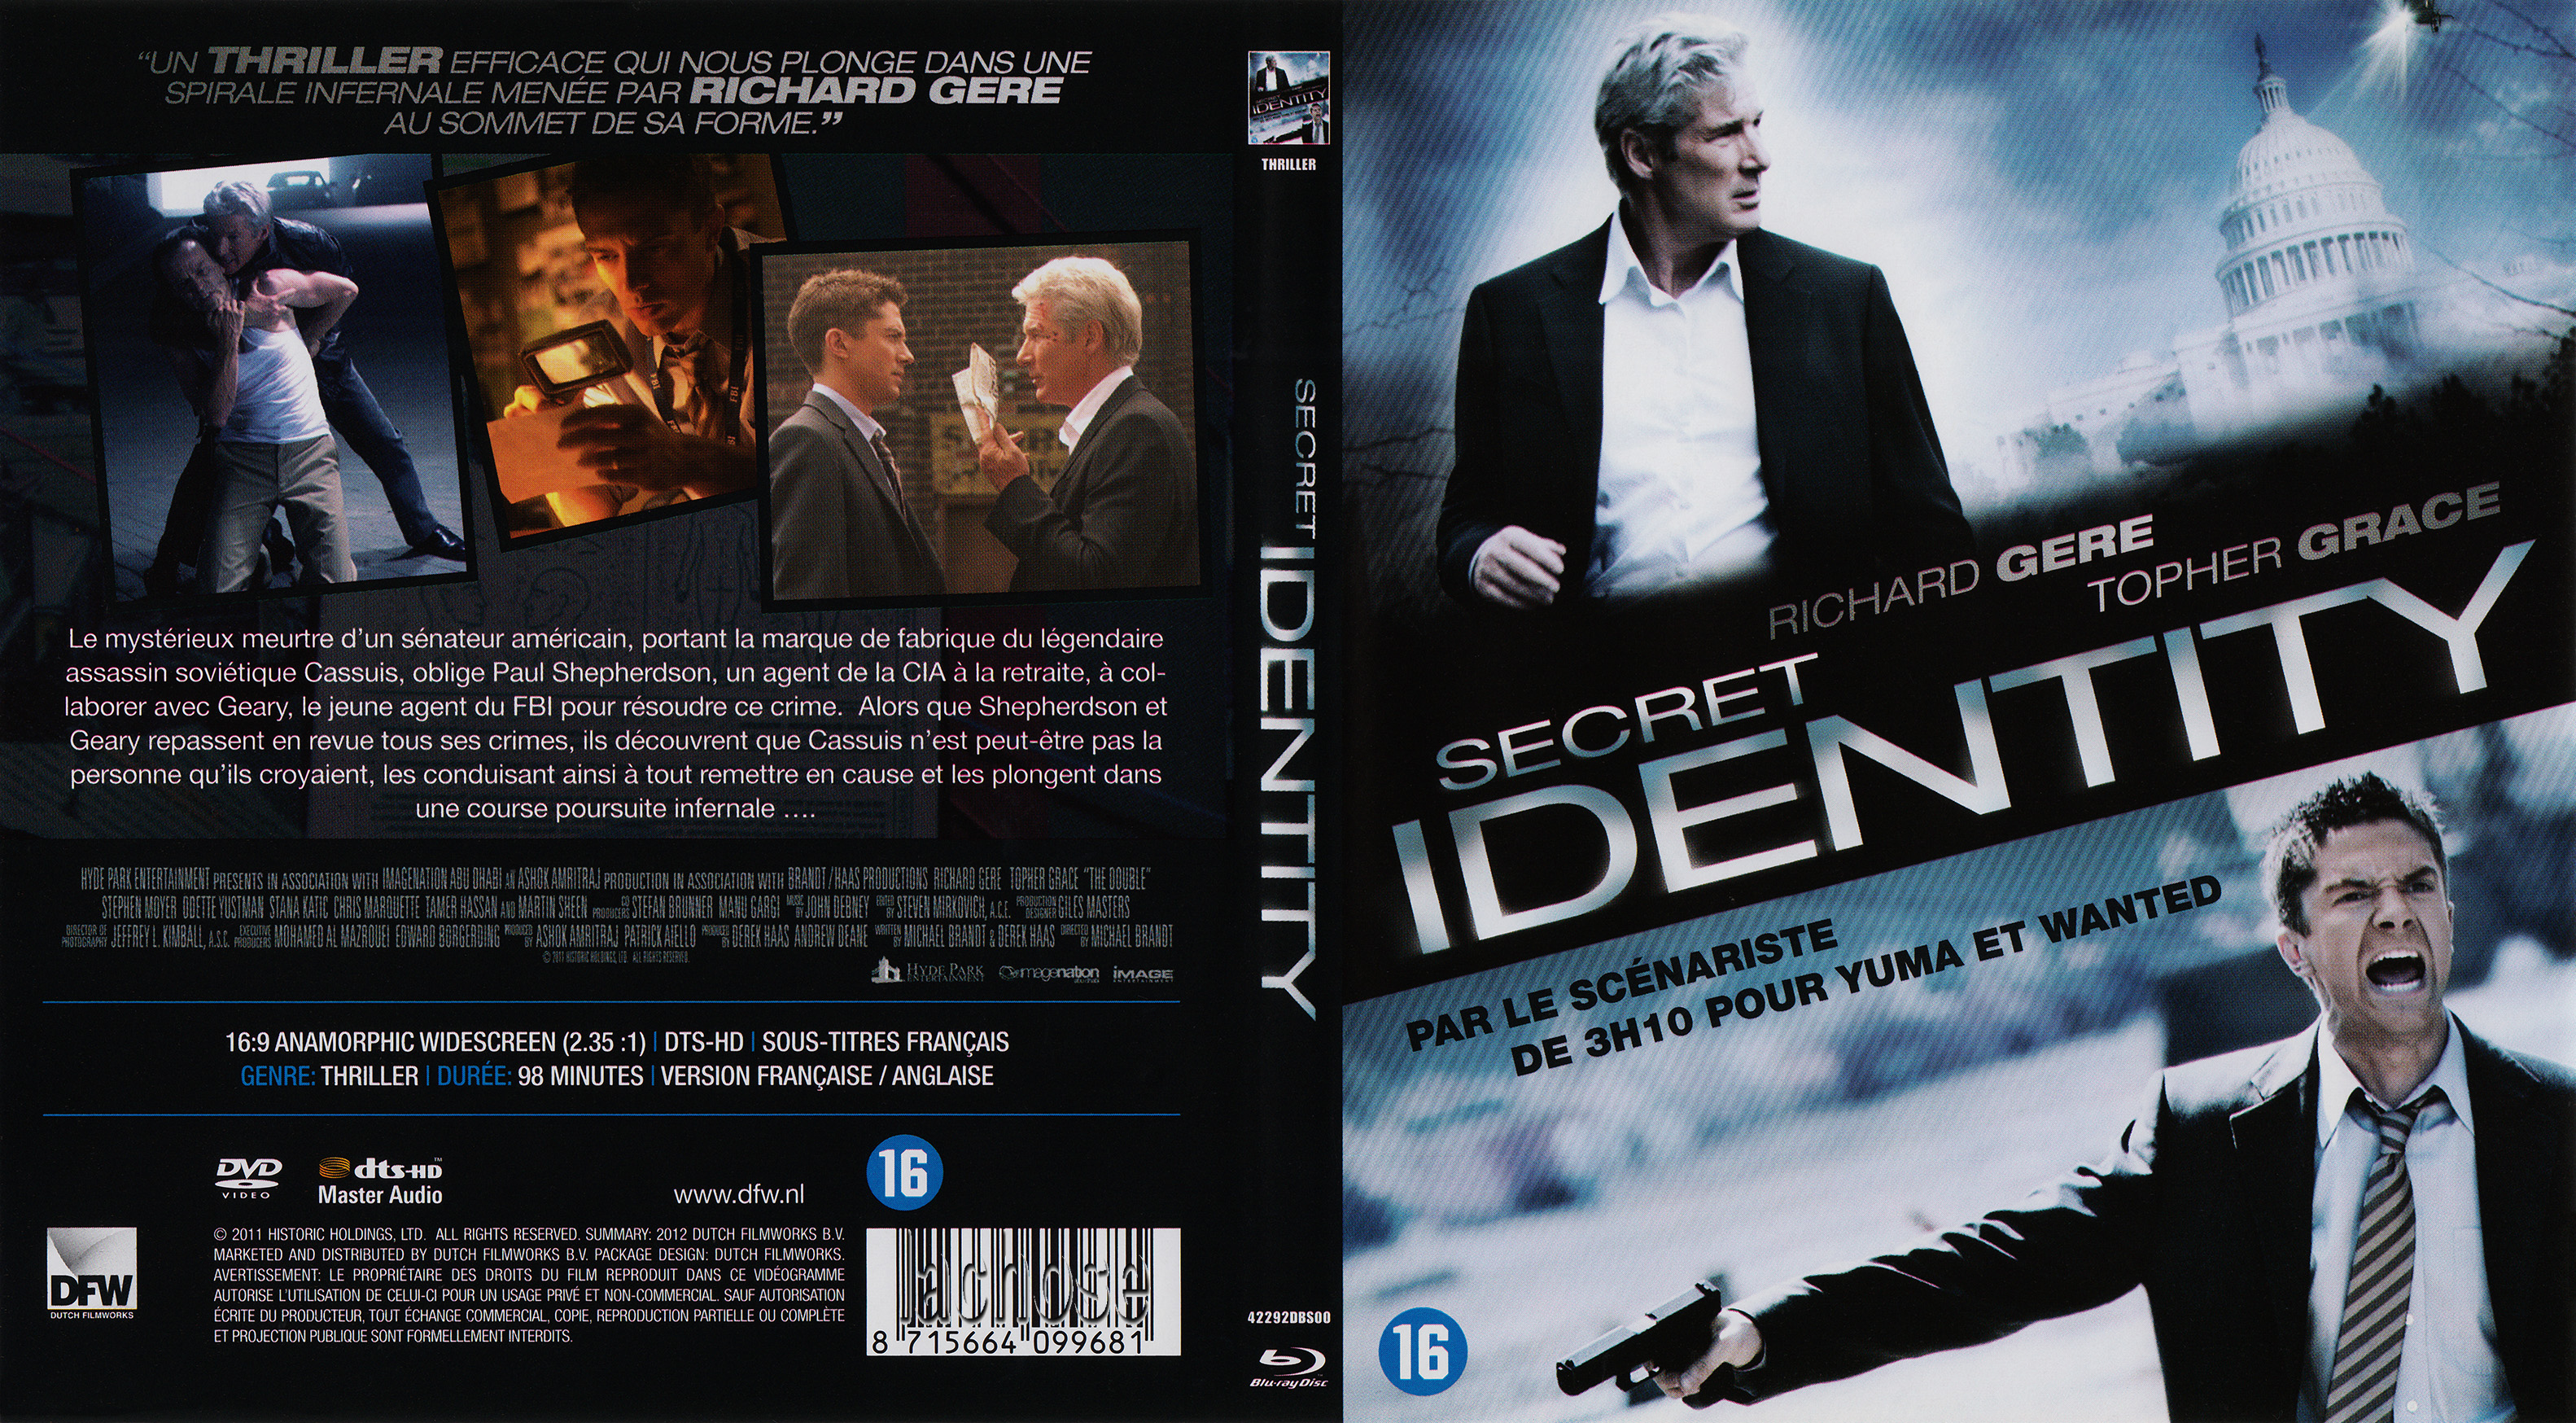 Jaquette DVD Secret identity (BLU-RAY) v2